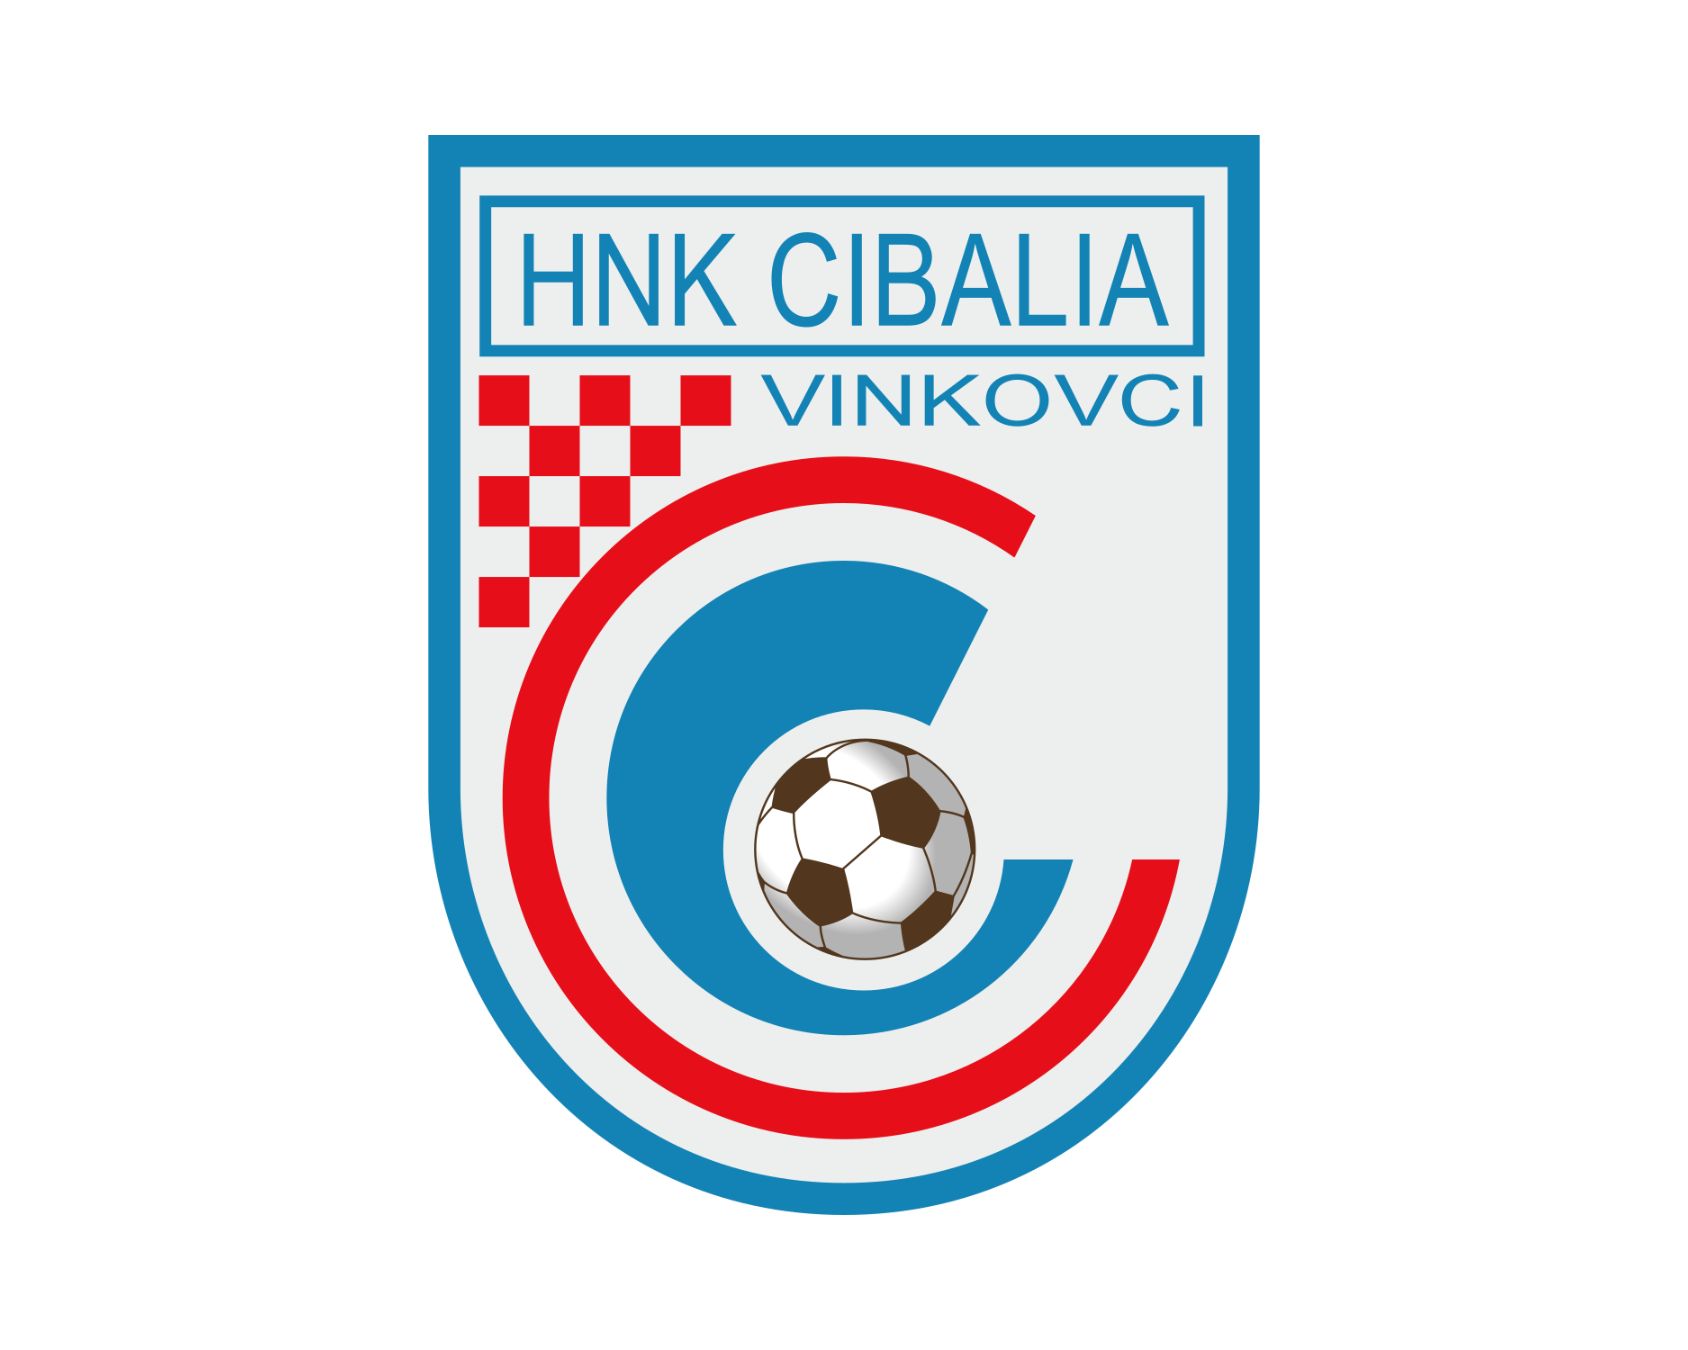 hnk-cibalia-17-football-club-facts